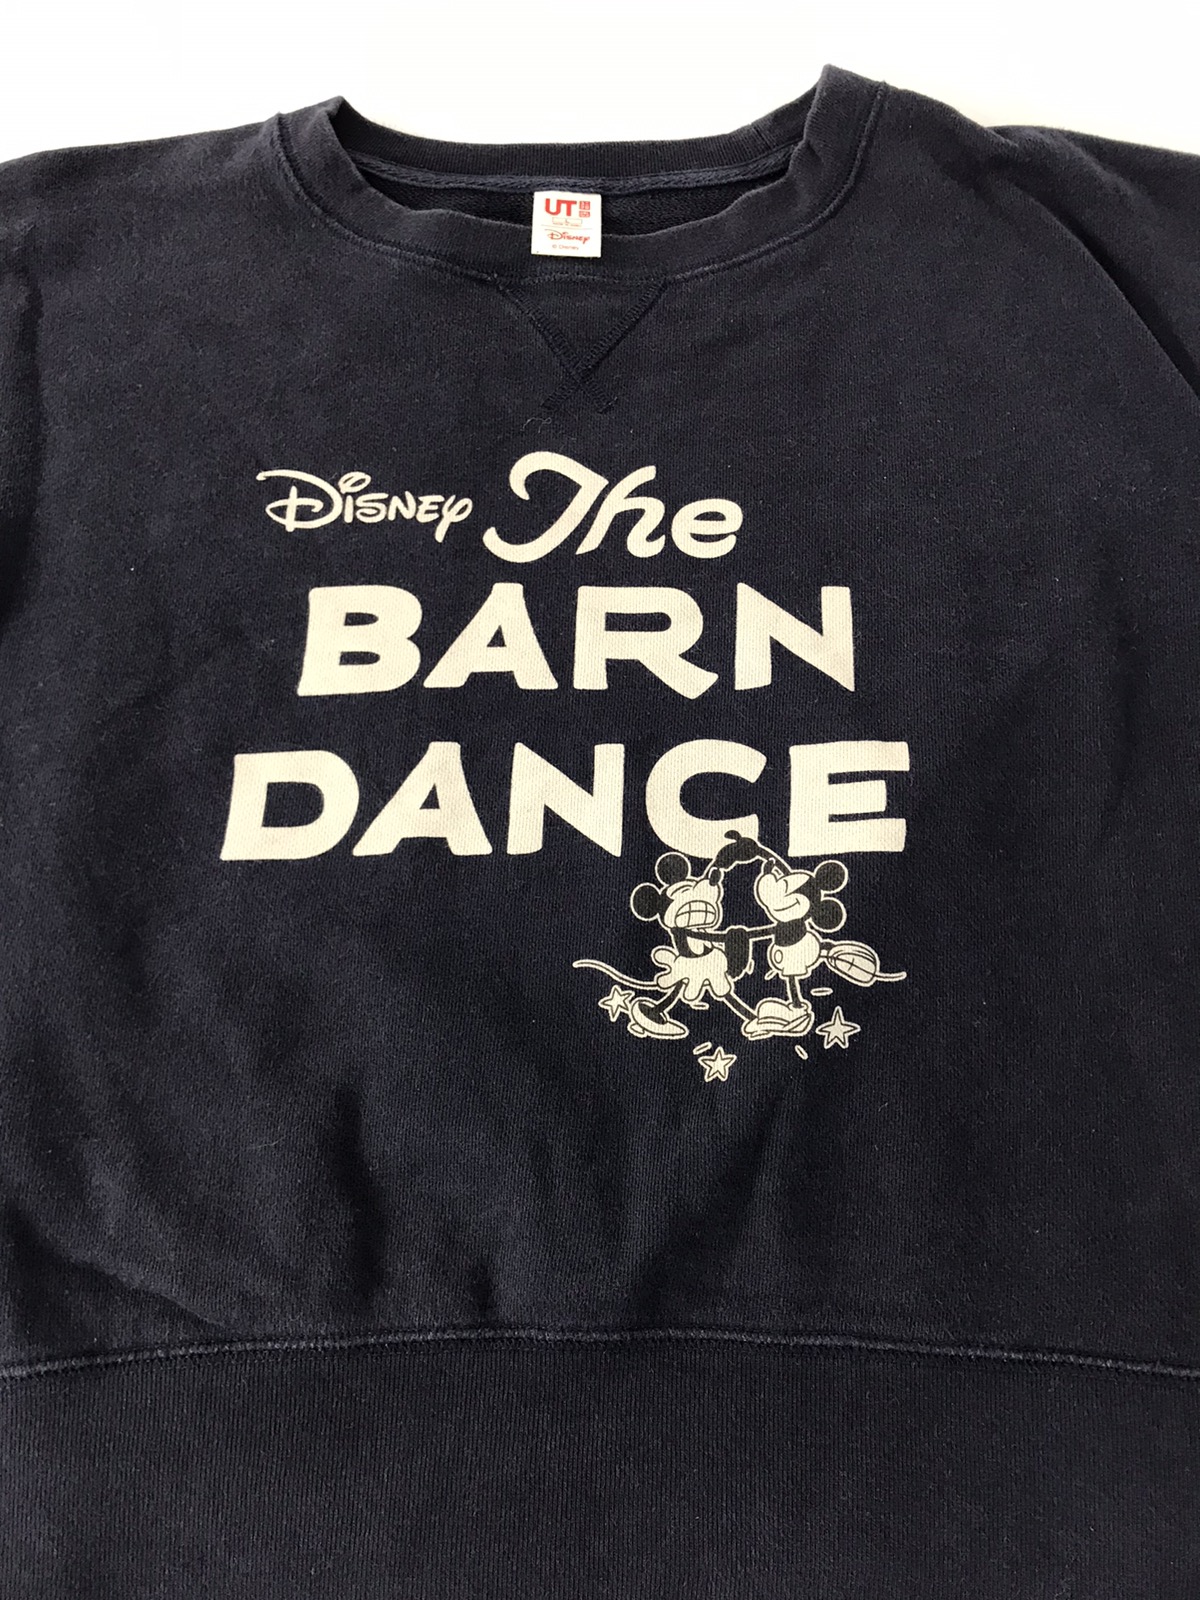 Mickey Mouse - Disney Mickey Mouse Barn Dance Sweatshirt Big Logo Printed - 3